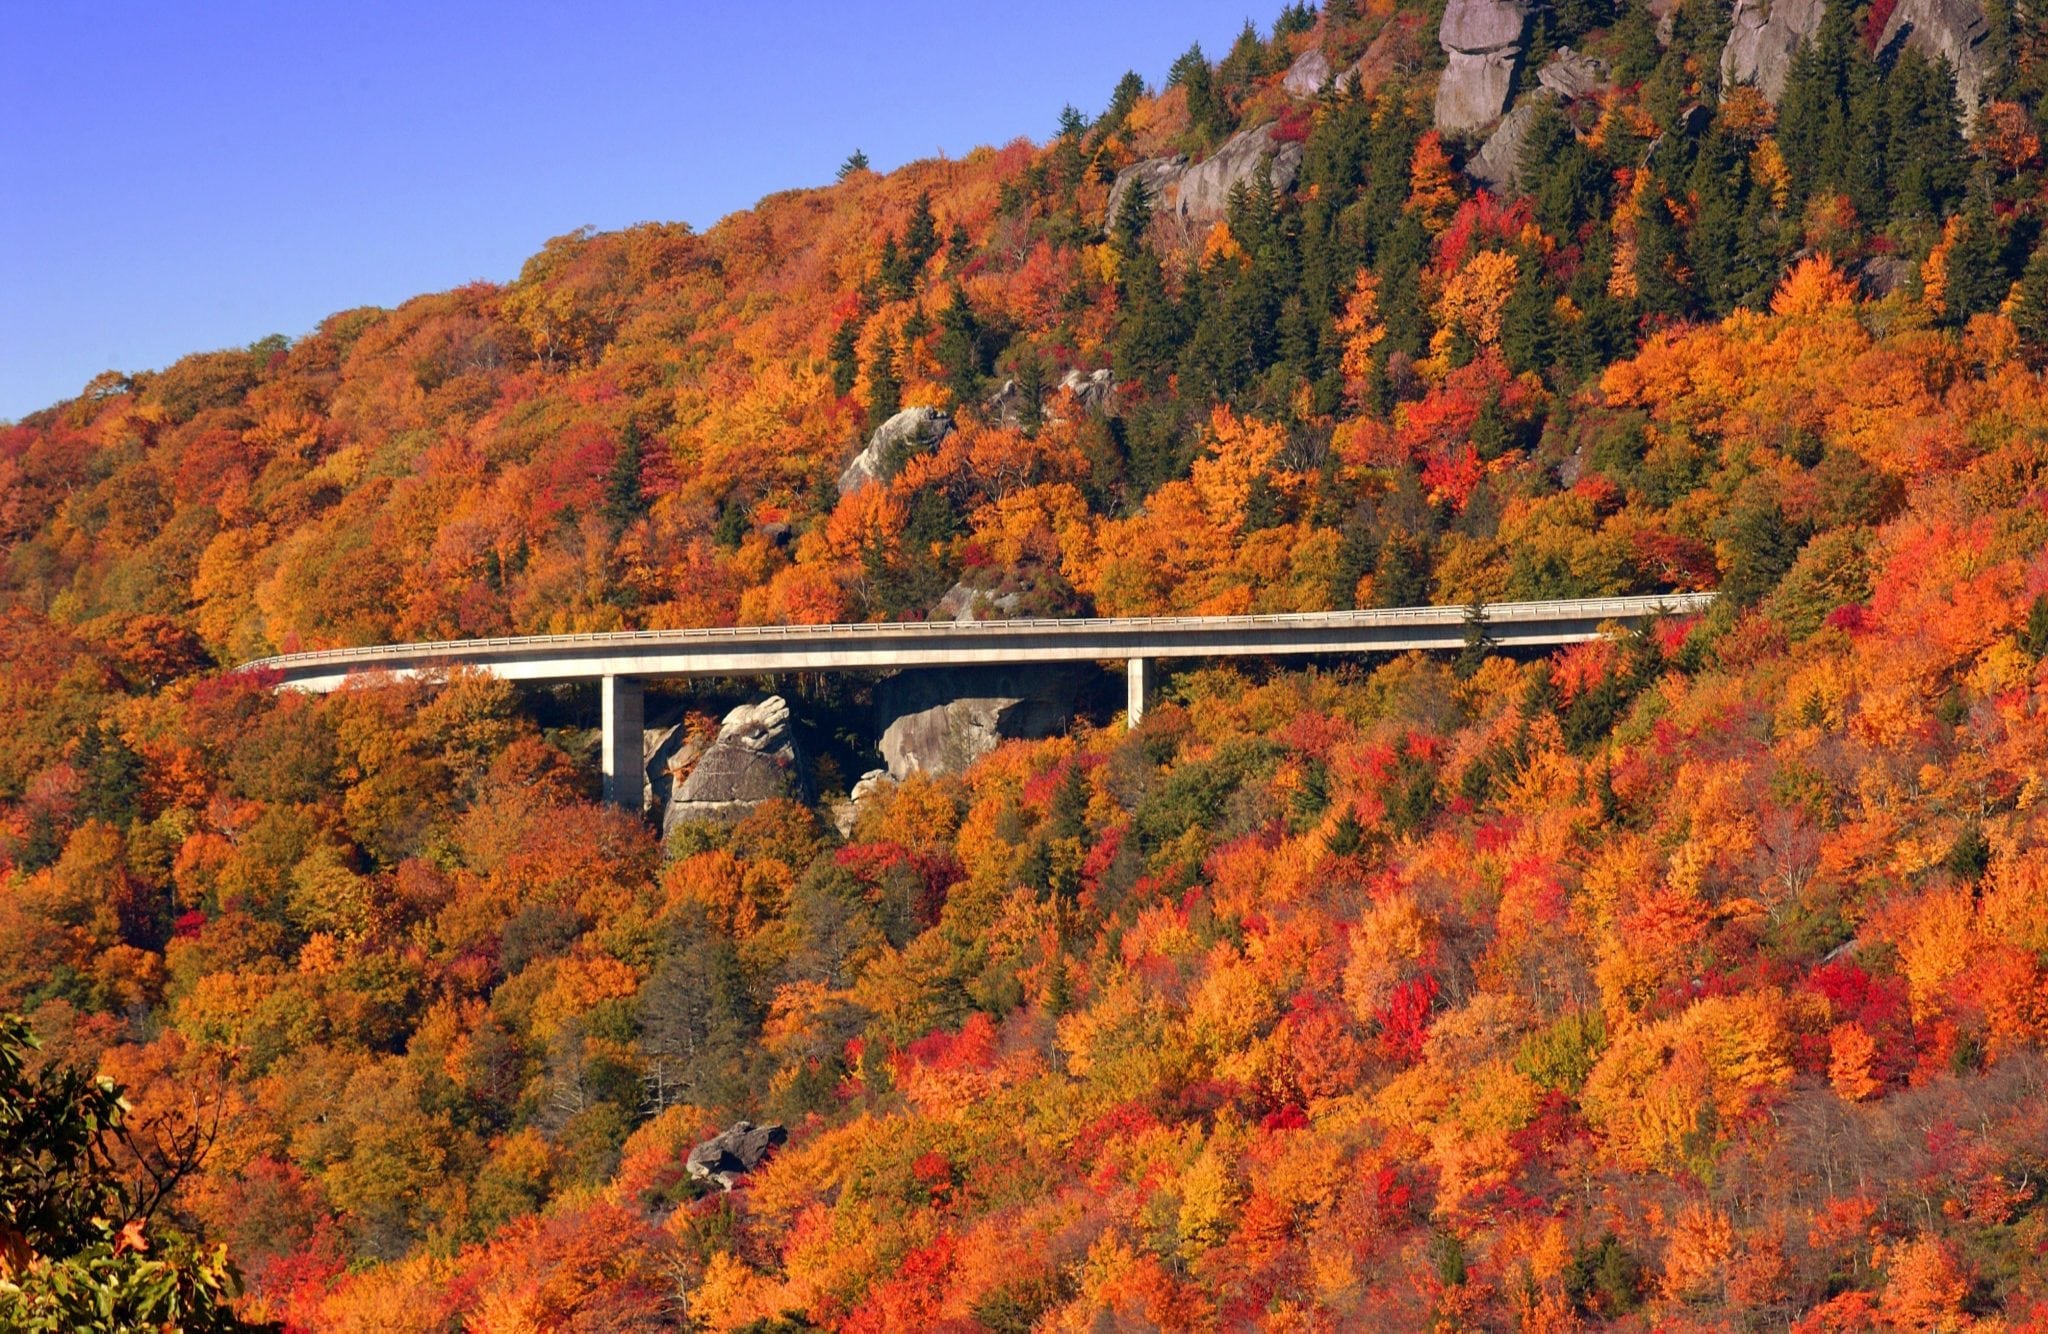 The Linn Cove Viaduct crosses fall foliage on the Blue Ridge Parkway in North Carolina.